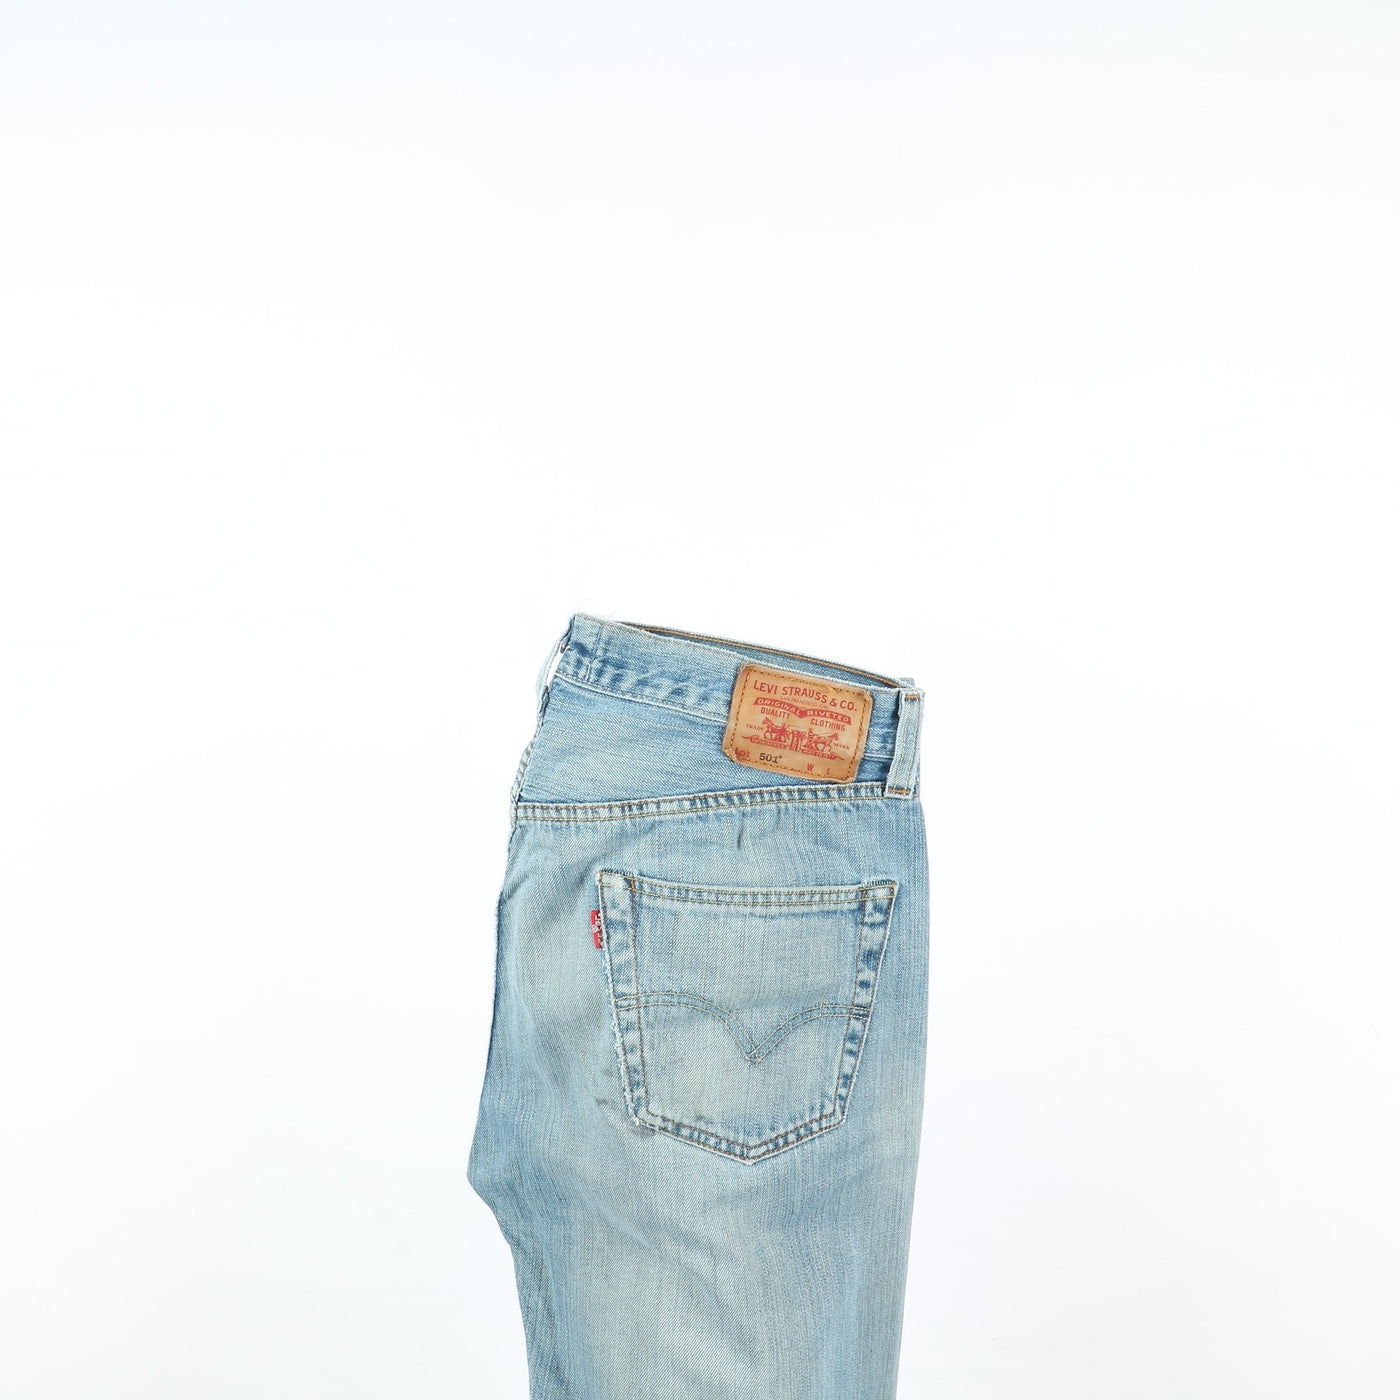 Levi's 501 Rivets 1947 Jeans Vintage Denim W34 L36 Unisex Vita Alta Limited Edition